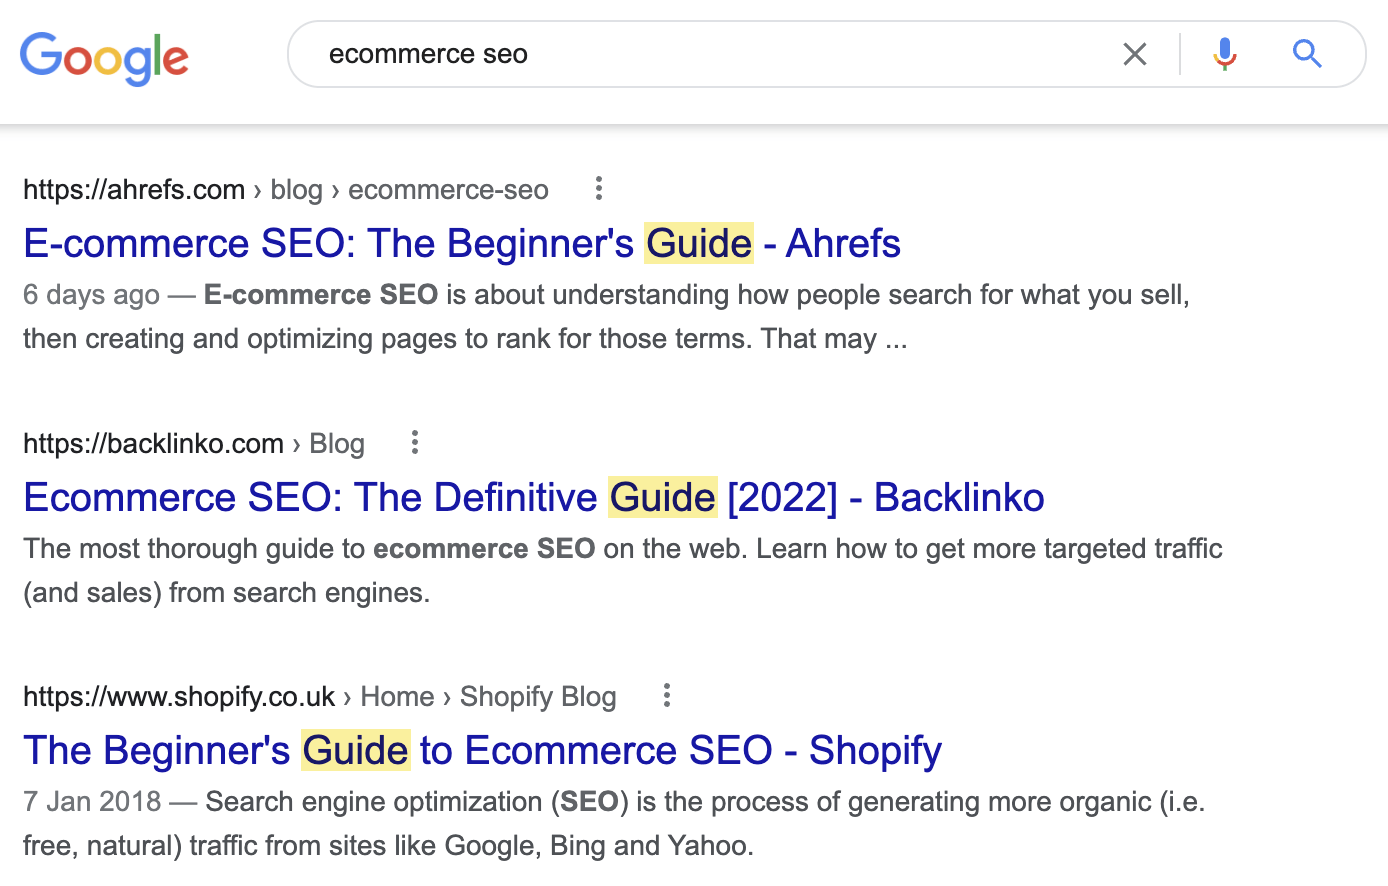 用户搜索 "ecommerce seo"想要一个指南